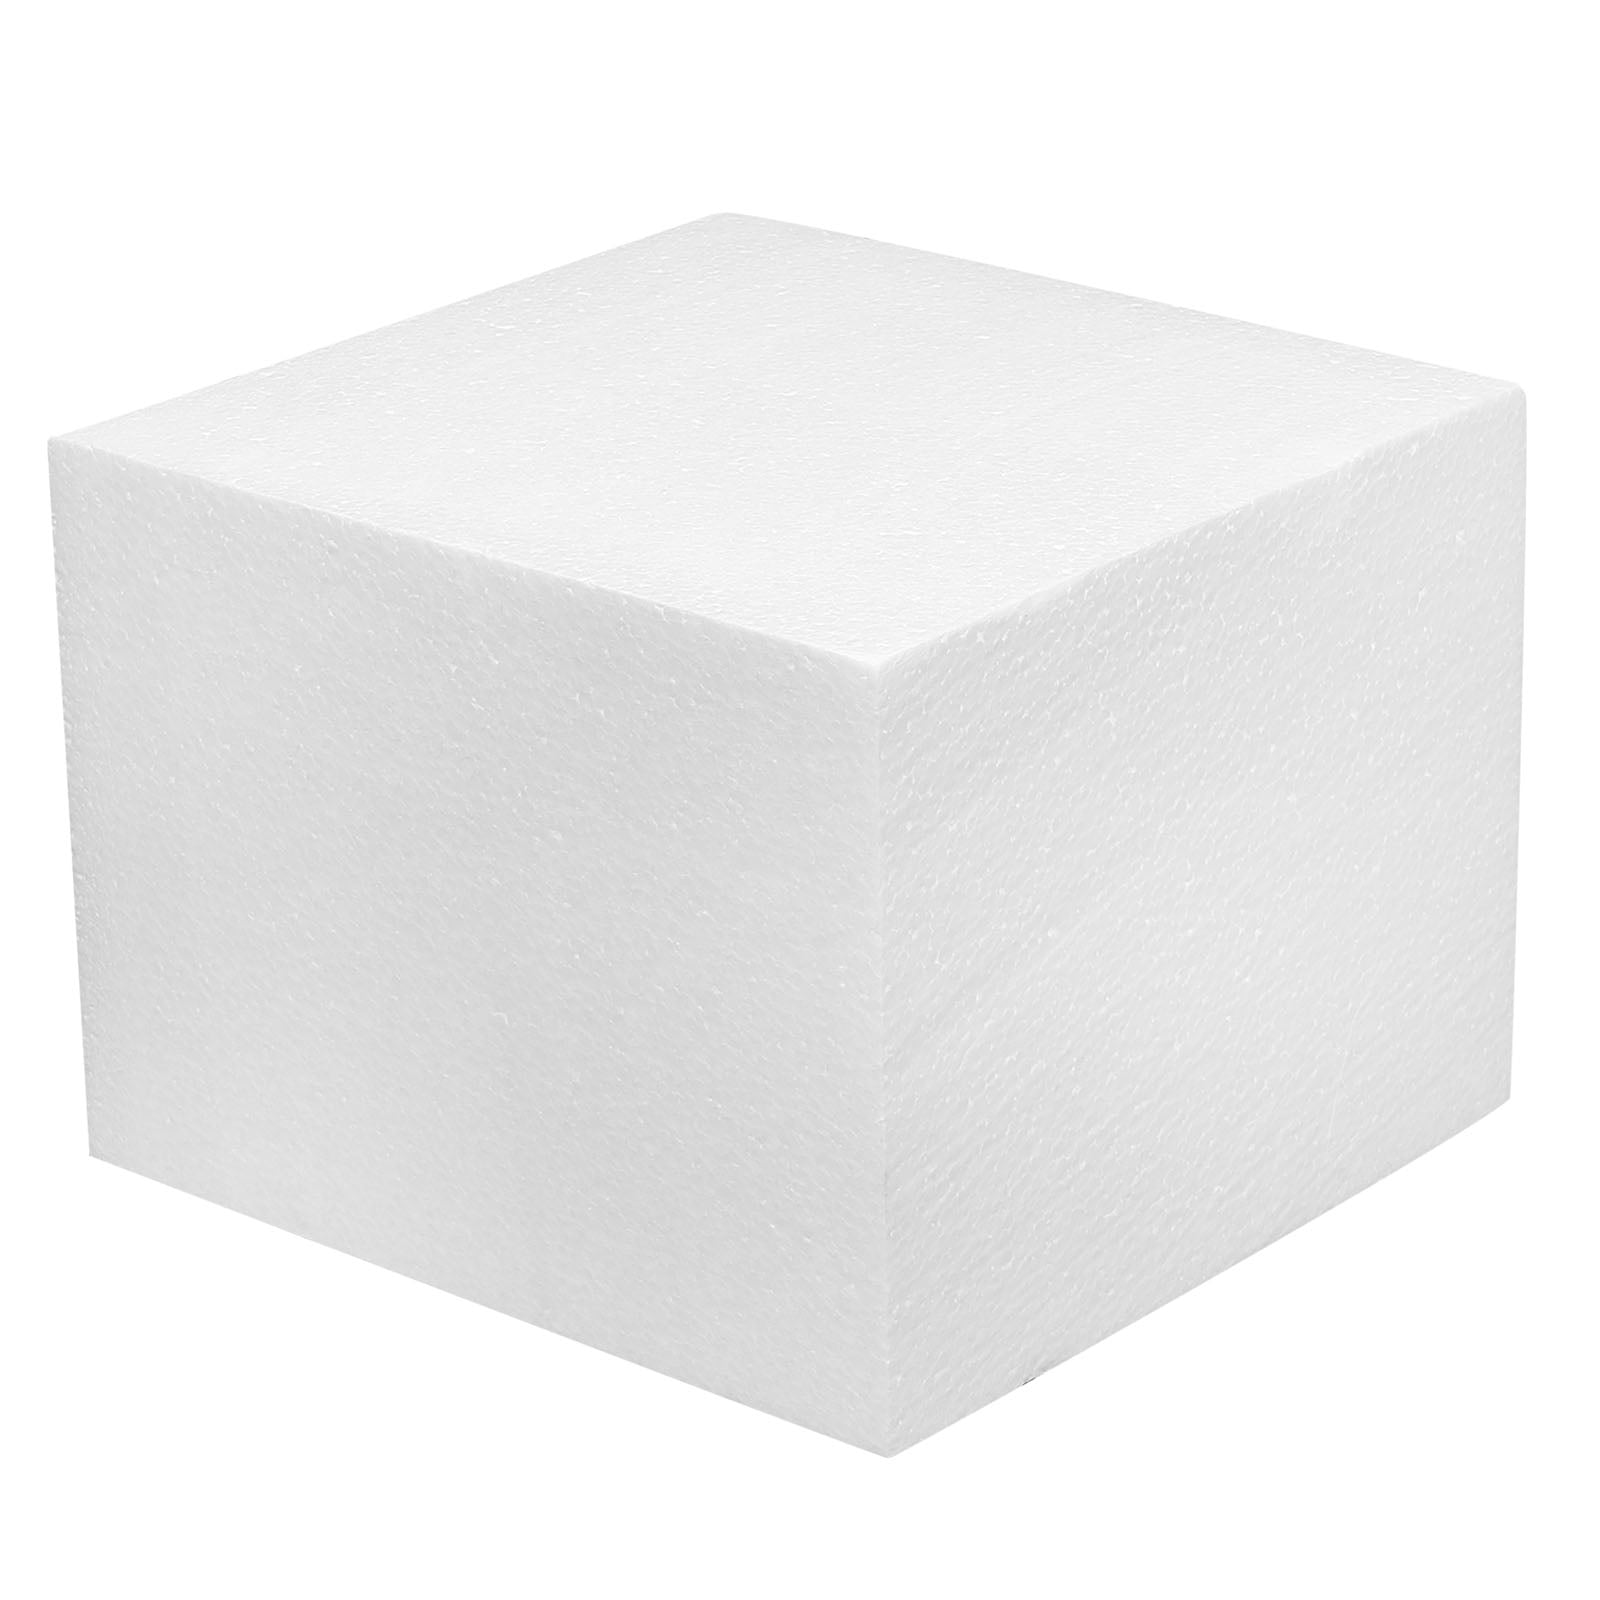 AMZQNART Craft Foam Block, 1 in Thick 12x6 EPS Polystyrene Rectangle Foam  Blocks Packs of 12 Pcs for Art Sculpting, Sculpture, Modeling, School and